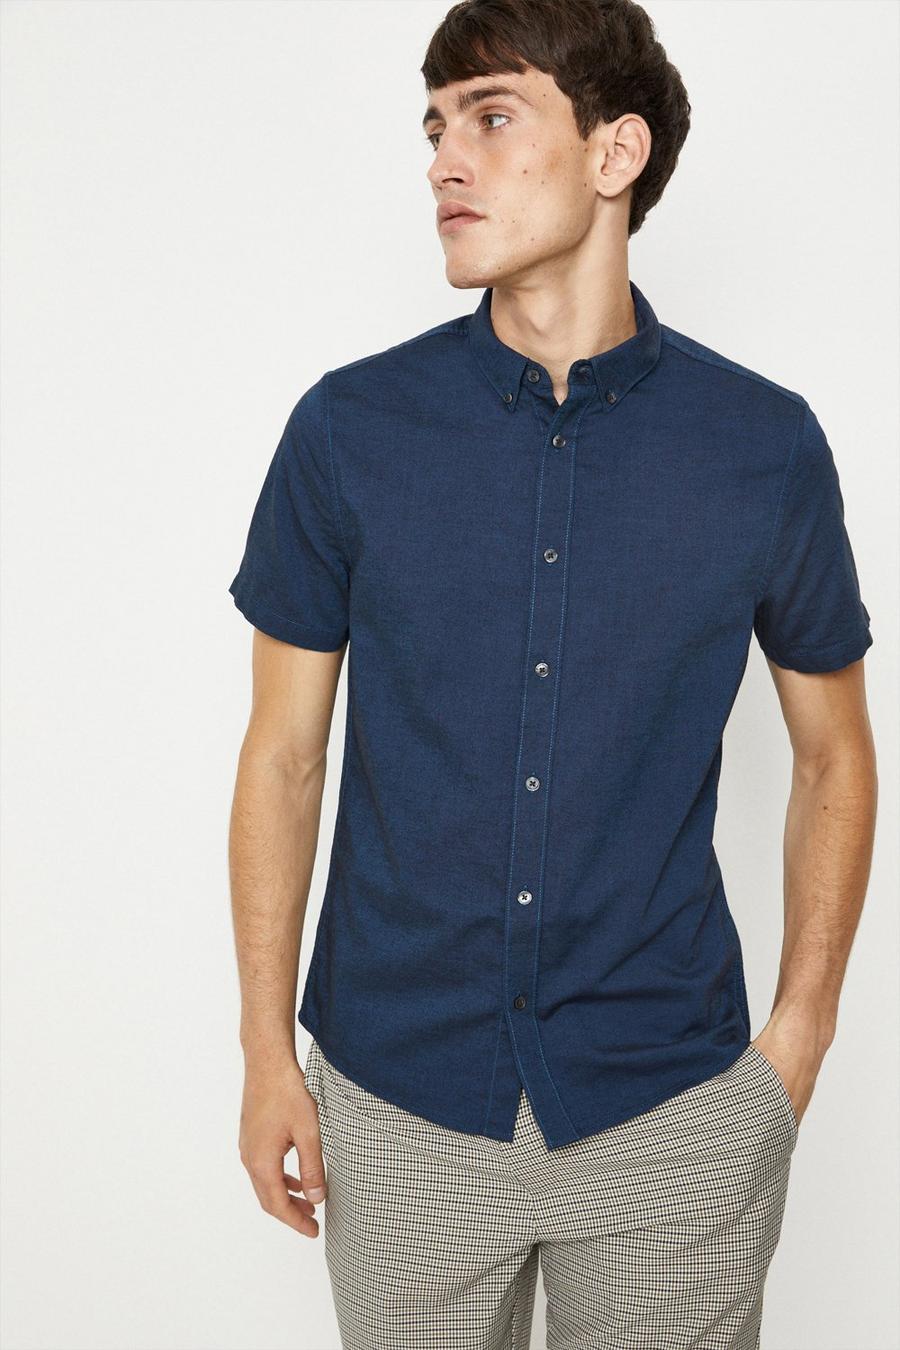 Short Sleeve Marine Blue Cotton Oxford Shirt